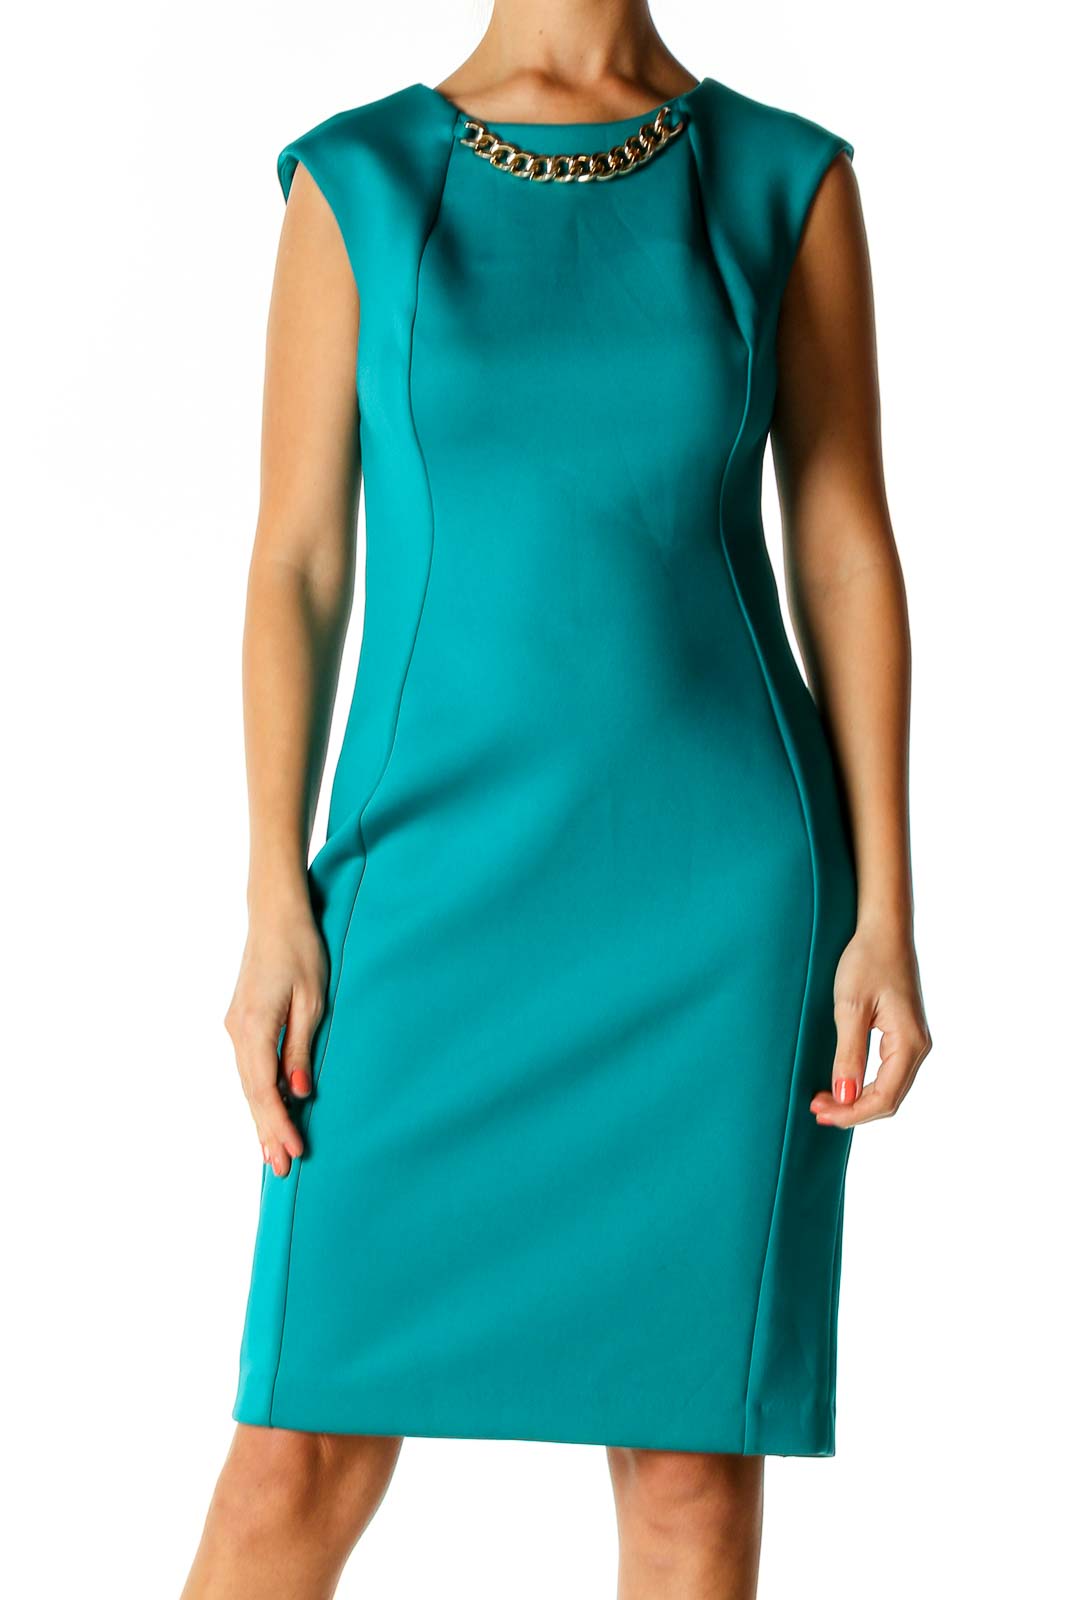 Calvin Klein - Blue Solid Classic Sheath Dress Polyester Spandex | SilkRoll